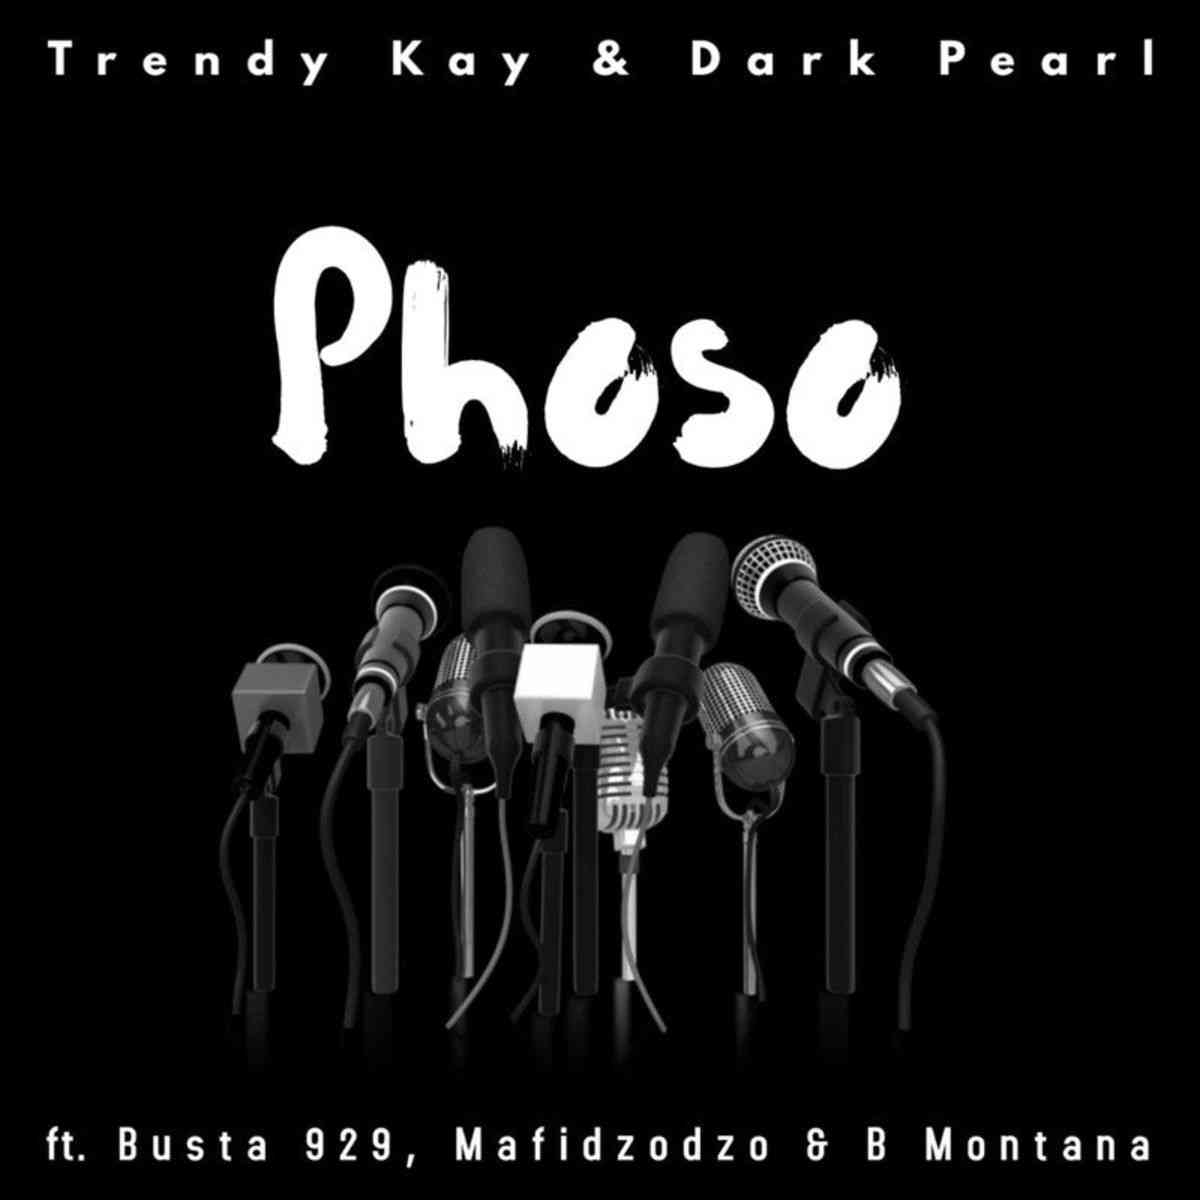 Trendy Kay & Dark Pearl Phoso